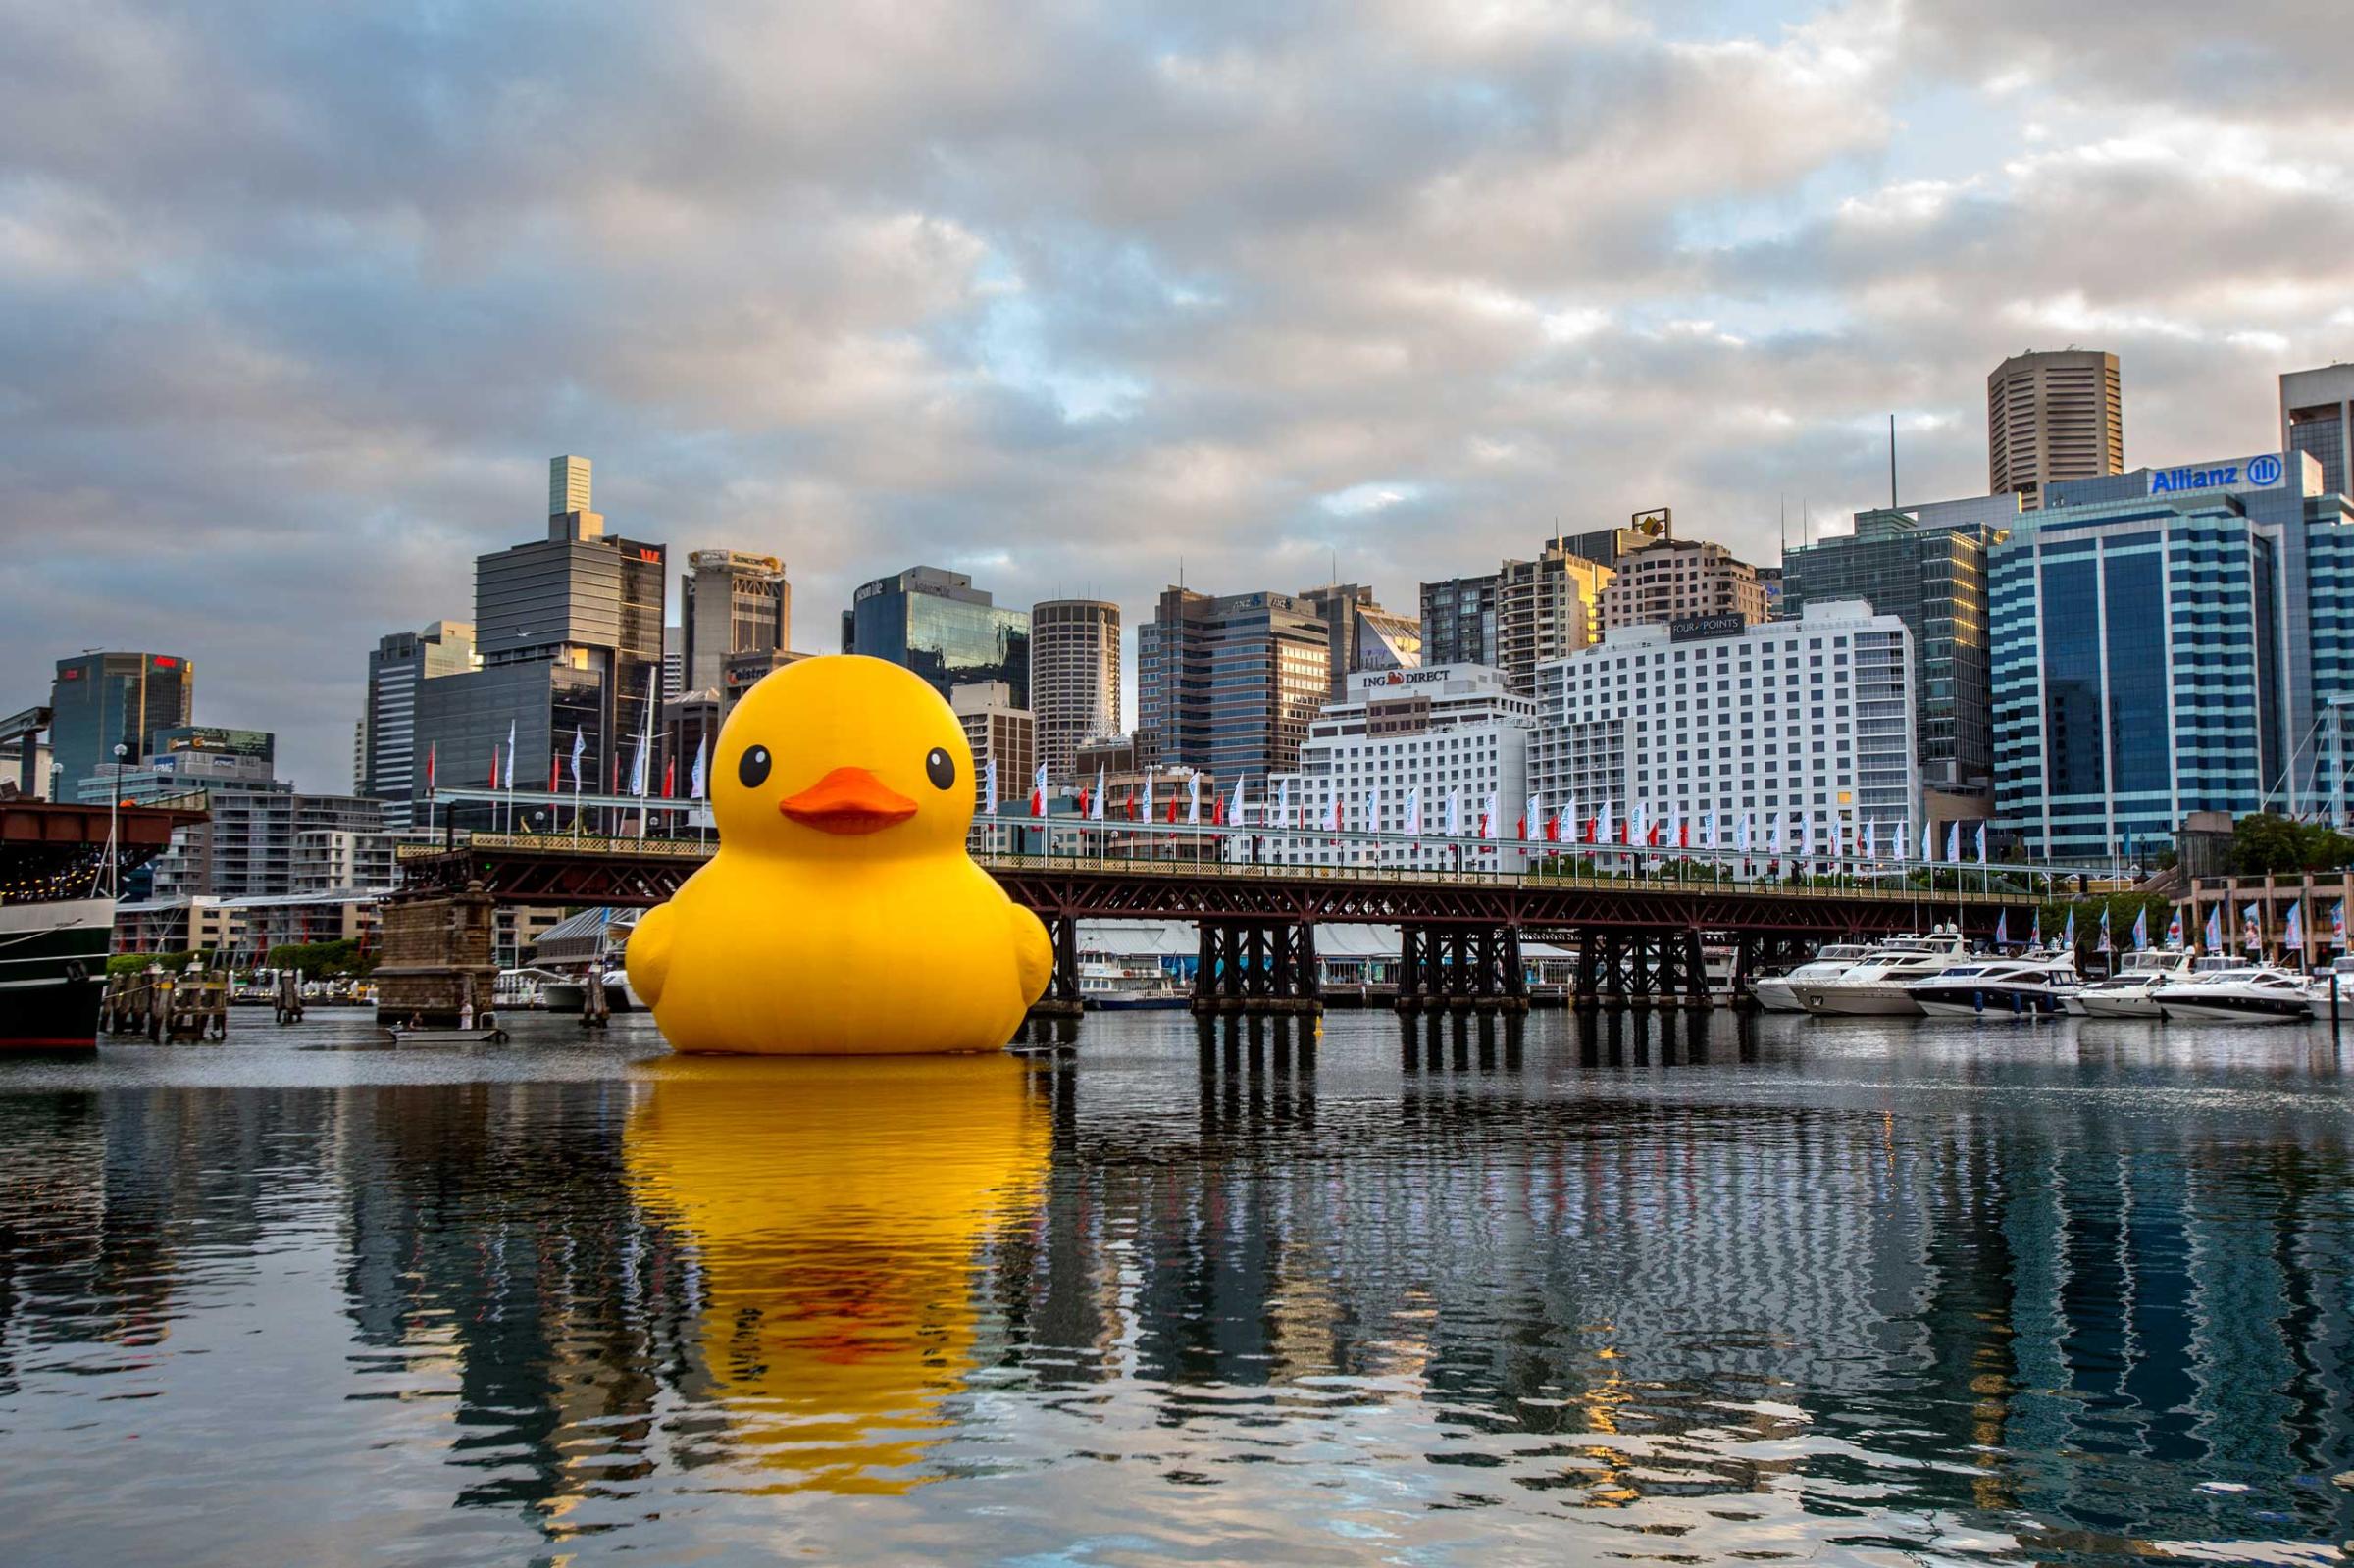 Sydney Festival's giant Rubber Duck installation